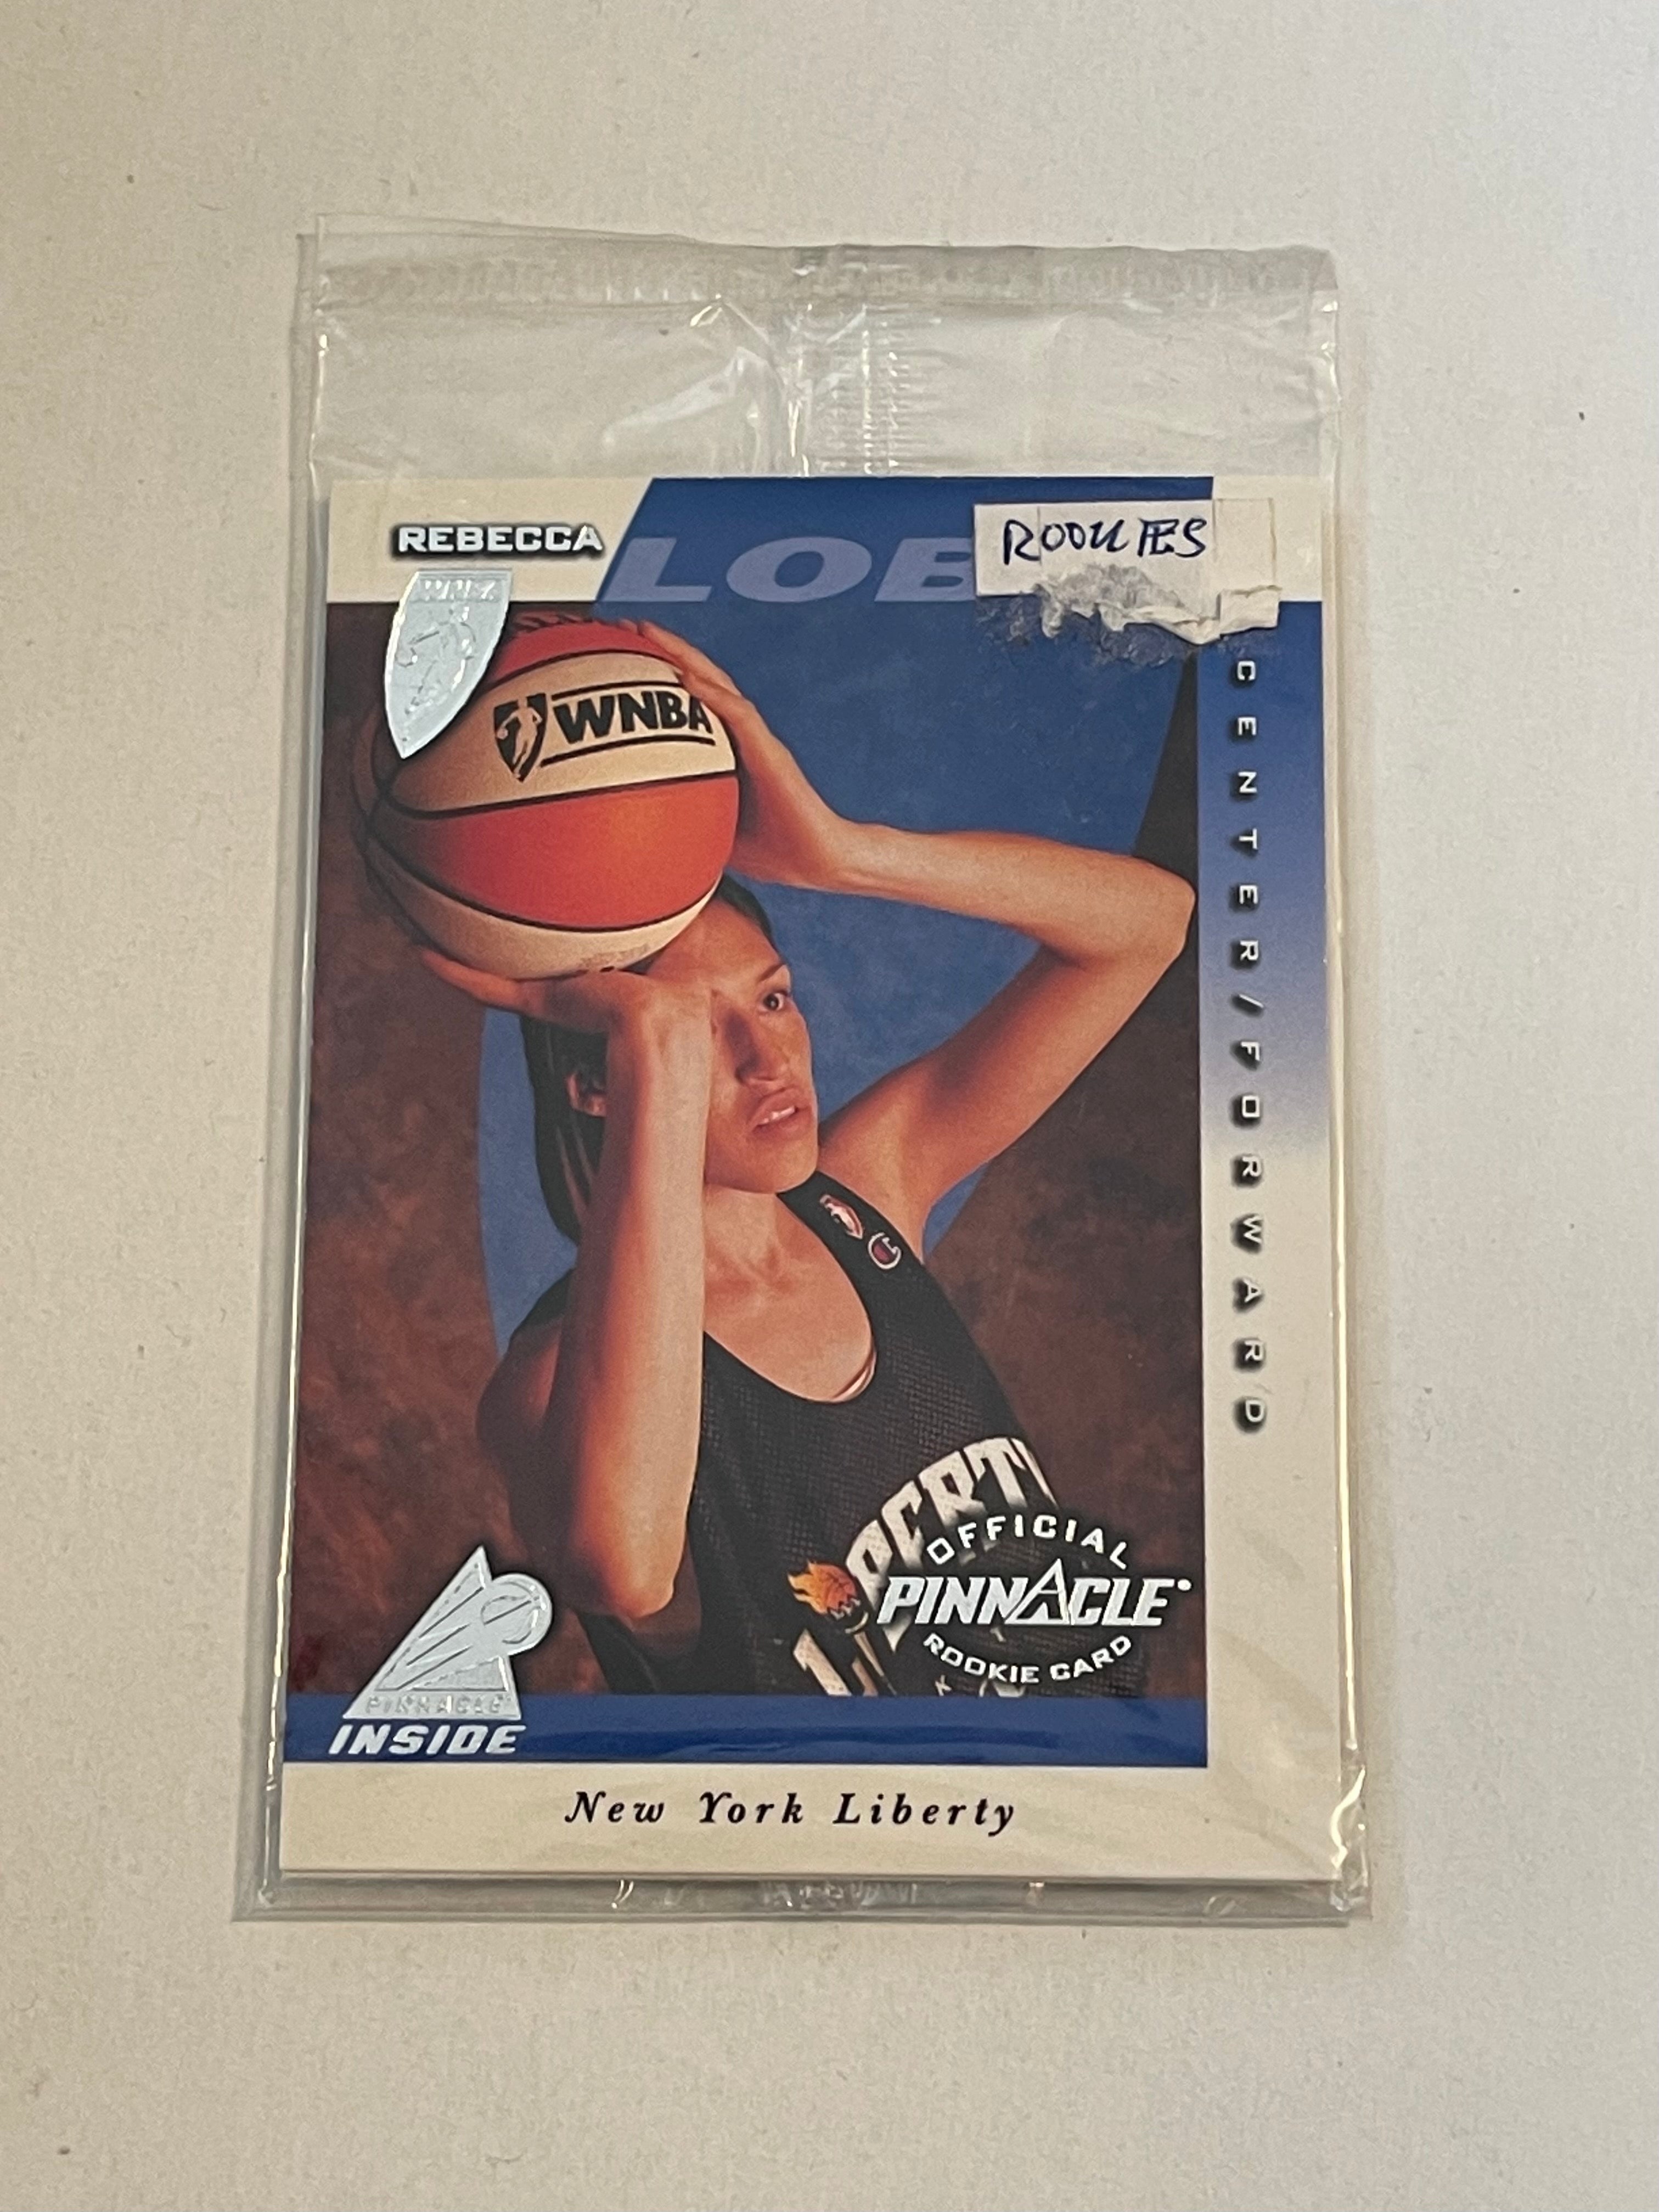 WNBA basketball factory sealed rookie pack Lisa Leslie and Rebecca Lobe 1997